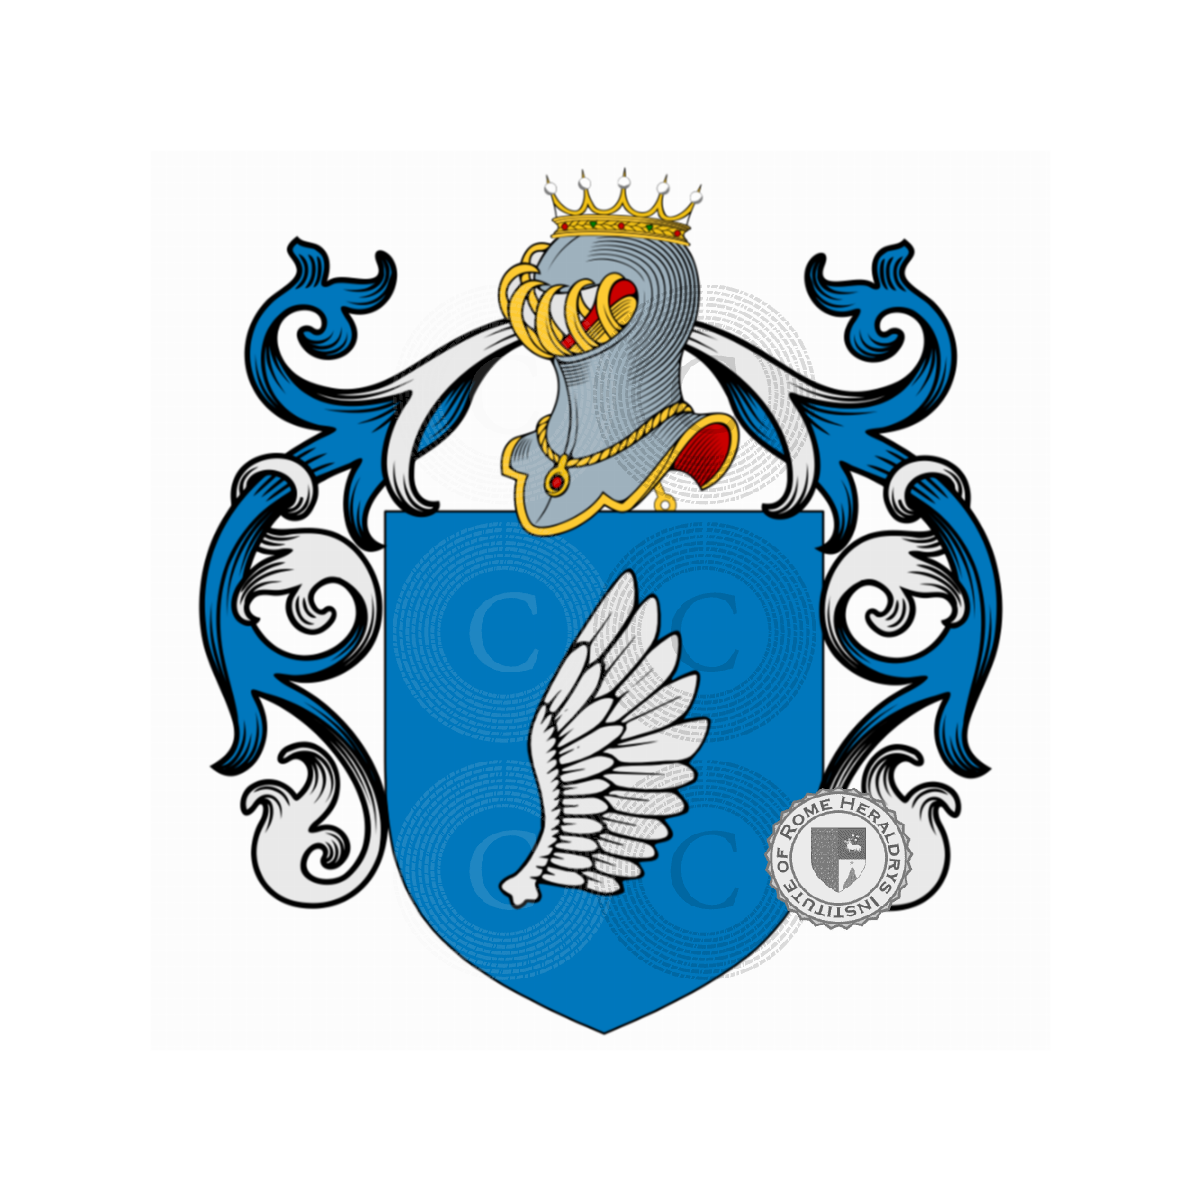 Escudo de la familiaBevi Laqua, Bevi Laqua,Bevilacqua